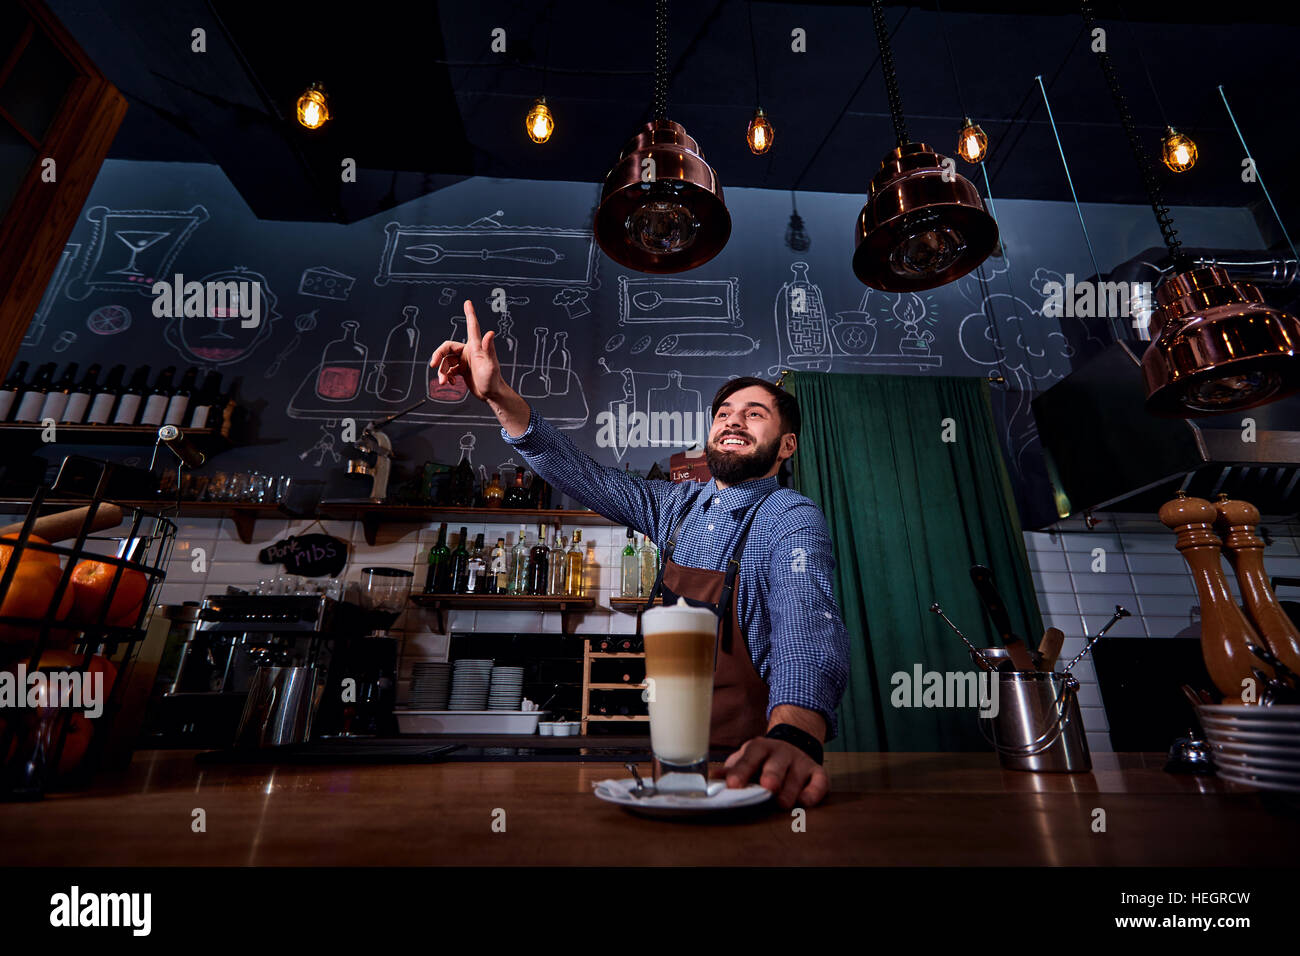 Barman barista in uniform making coffee tea, cocktails Stock Photo